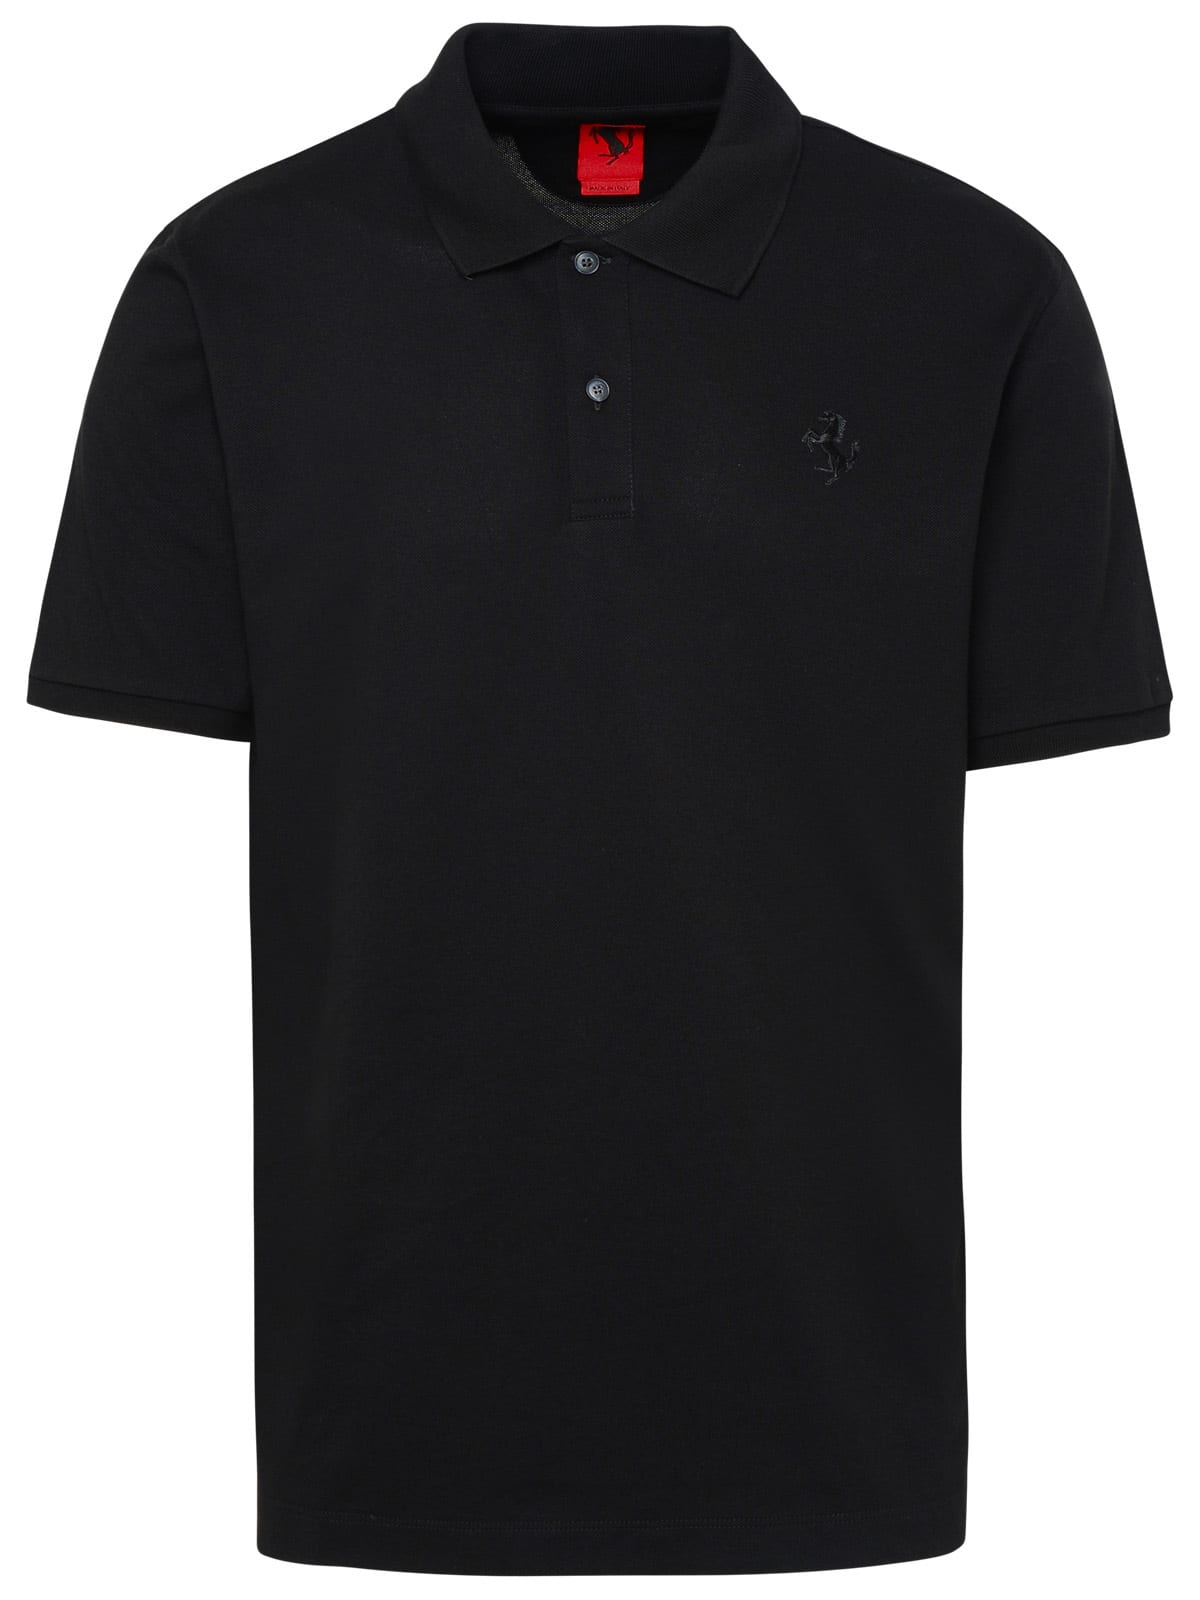 Ferrari Polo Shirt In Black Cotton